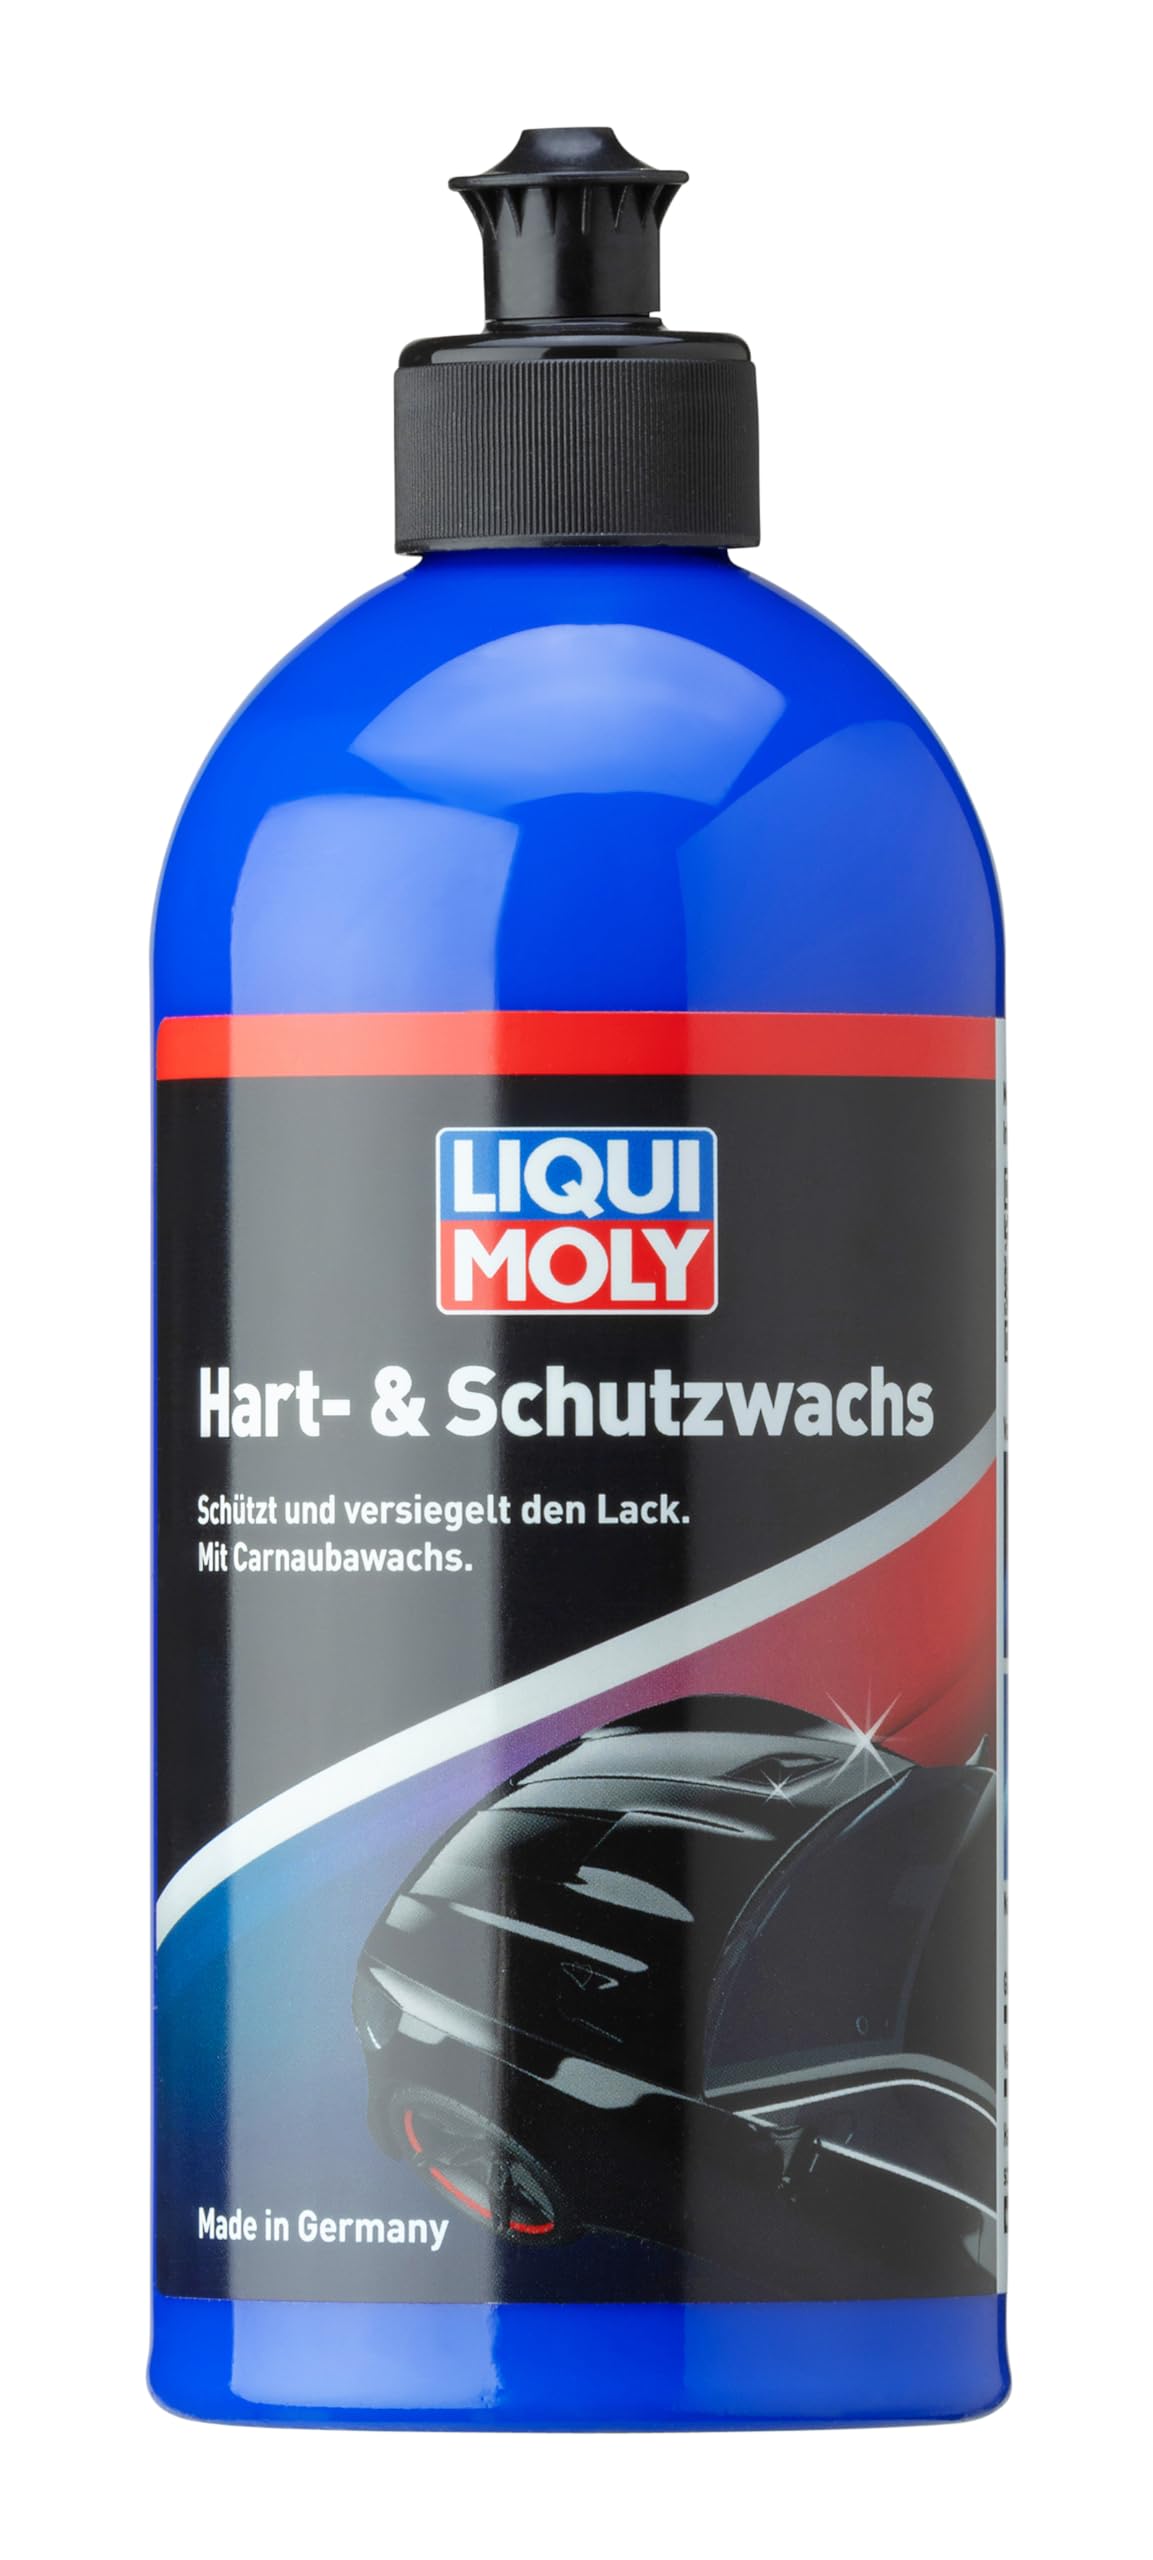 LIQUI MOLY Hart- & Schutzwachs | 500 ml | Lackpflege/Lackreinigung/Politur | Art.-Nr.: 21763 von Liqui Moly